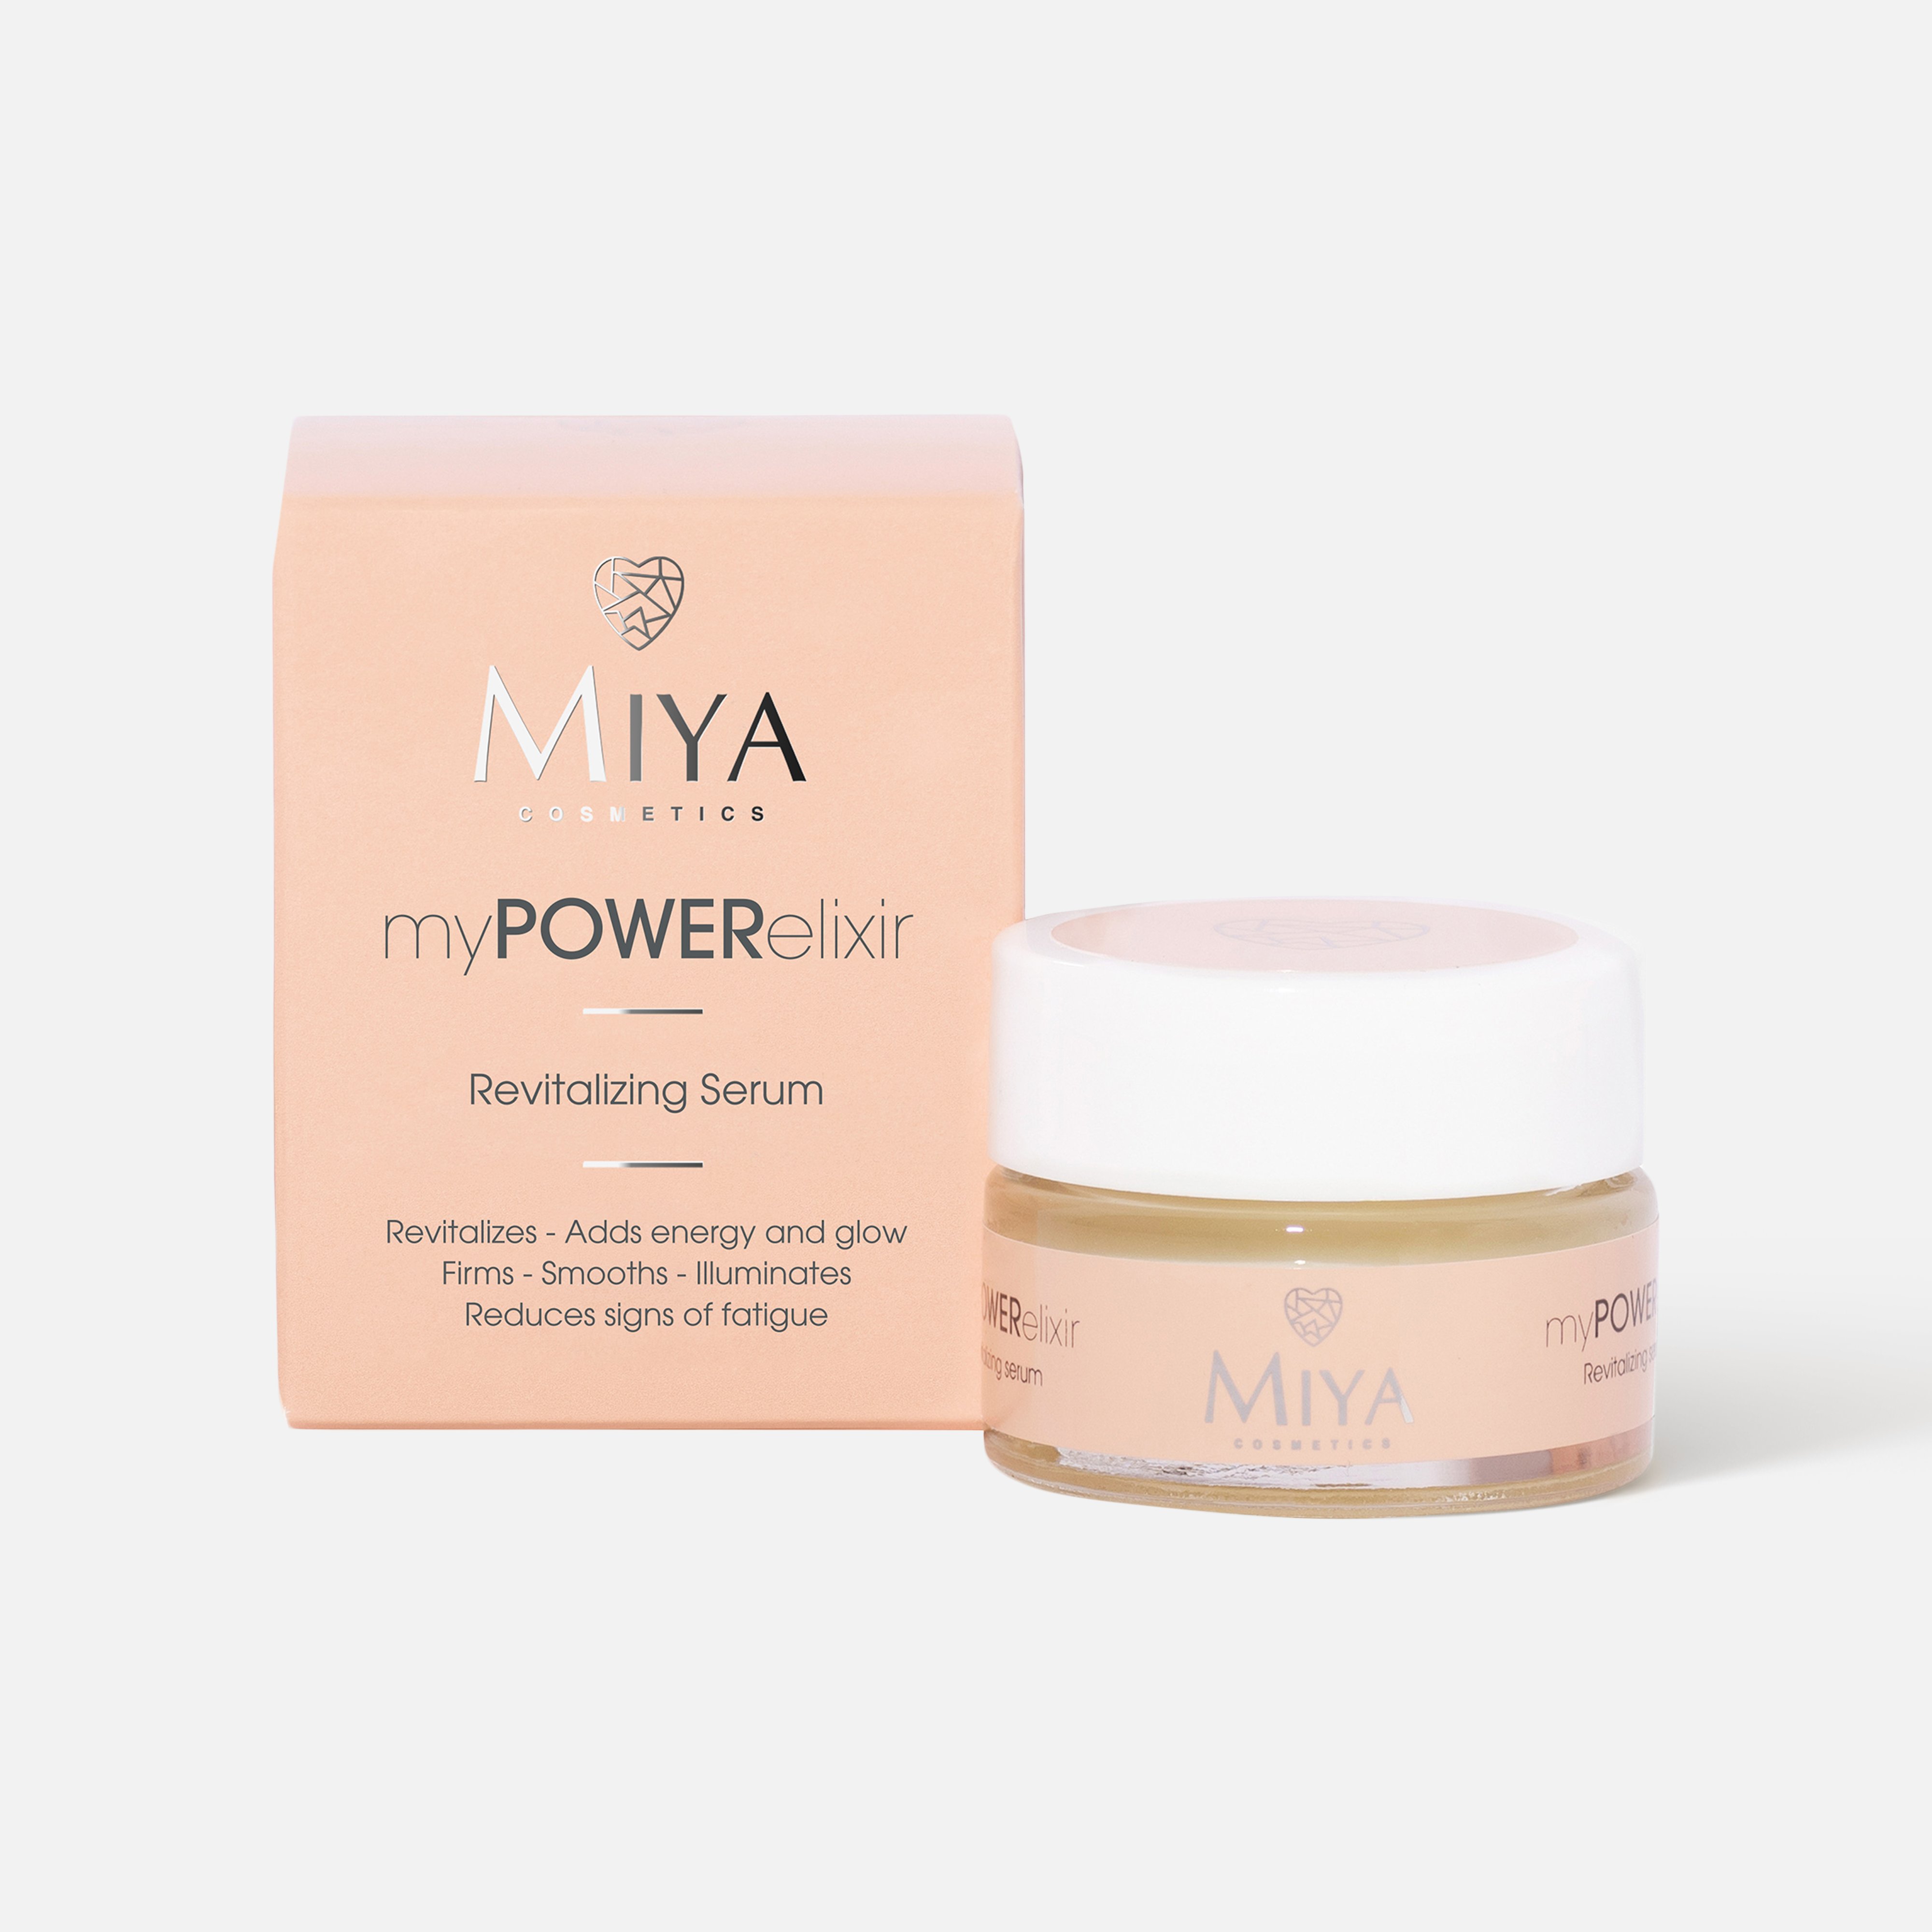 Сыворотка для лица Miya cosmetics myPOWERelixir восстанавливающая, 15 мл сыворотка для лица miya cosmetics beauty lab hydrating triple hyaluronic acid 2% 30 мл